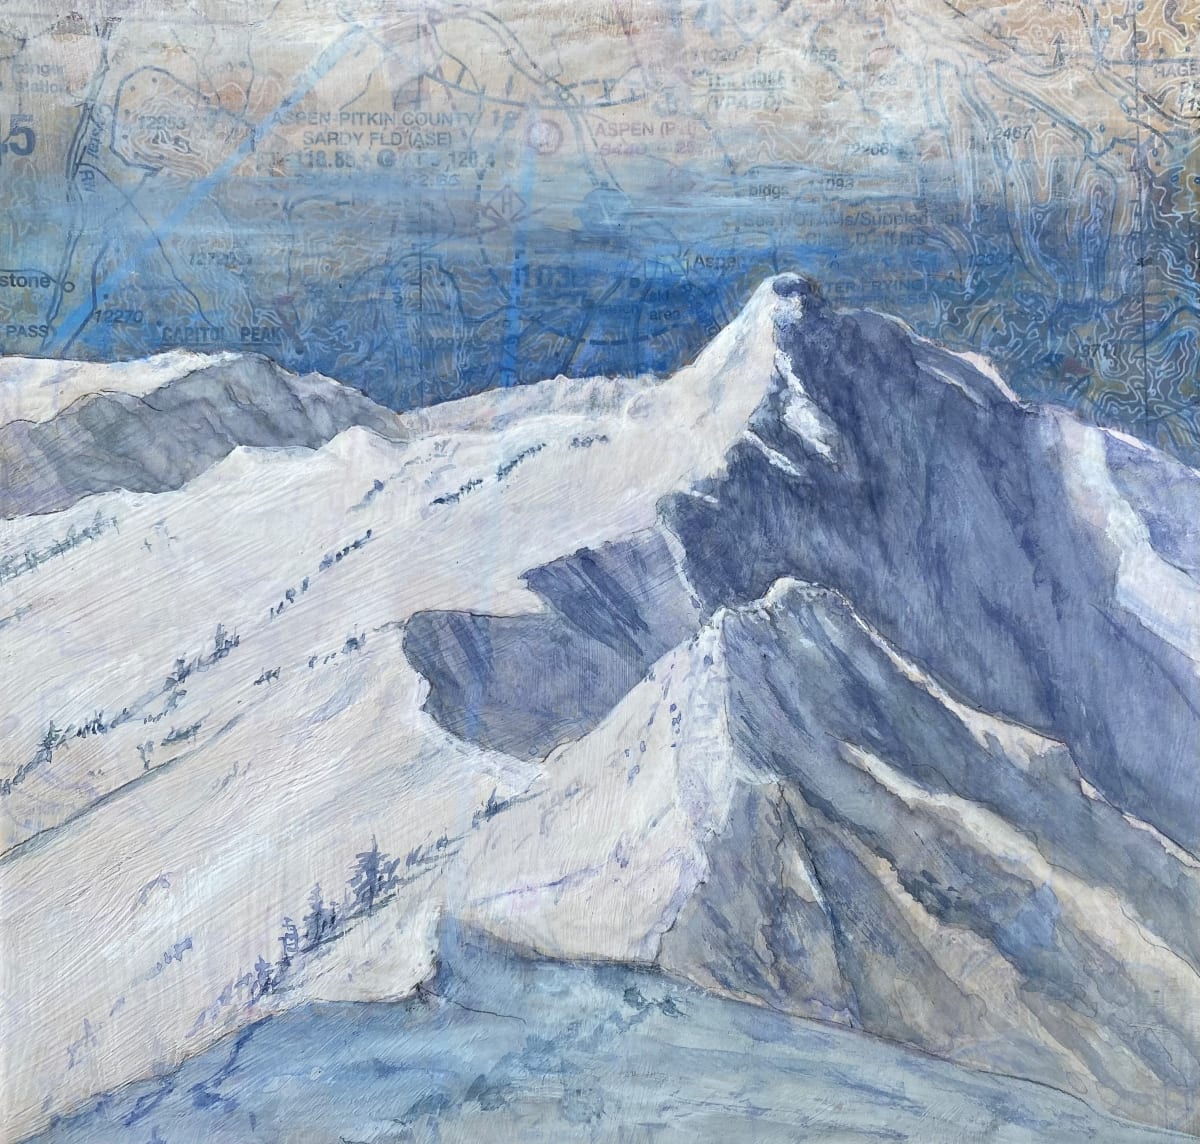 Tonar Peak by Amy Beidleman 